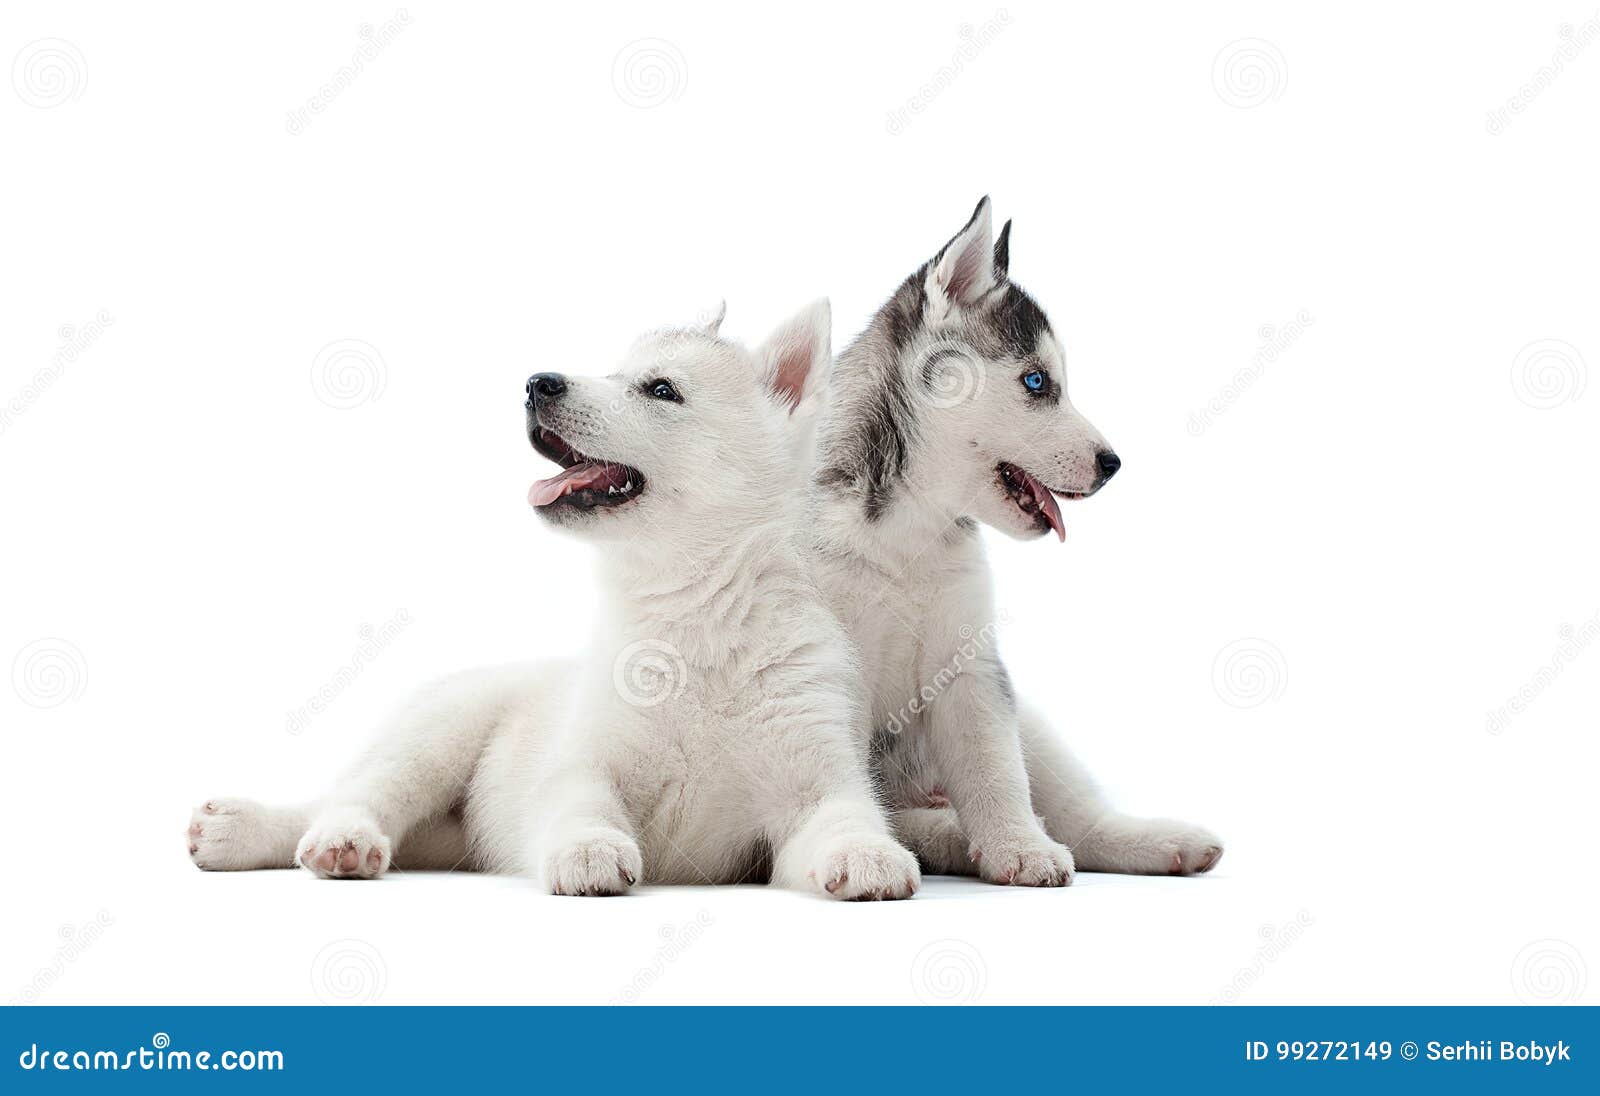 dos-perritos-bonitos-de-husky-siberiano-persiguen-para-la-comida-que-espera-99272149.jpg